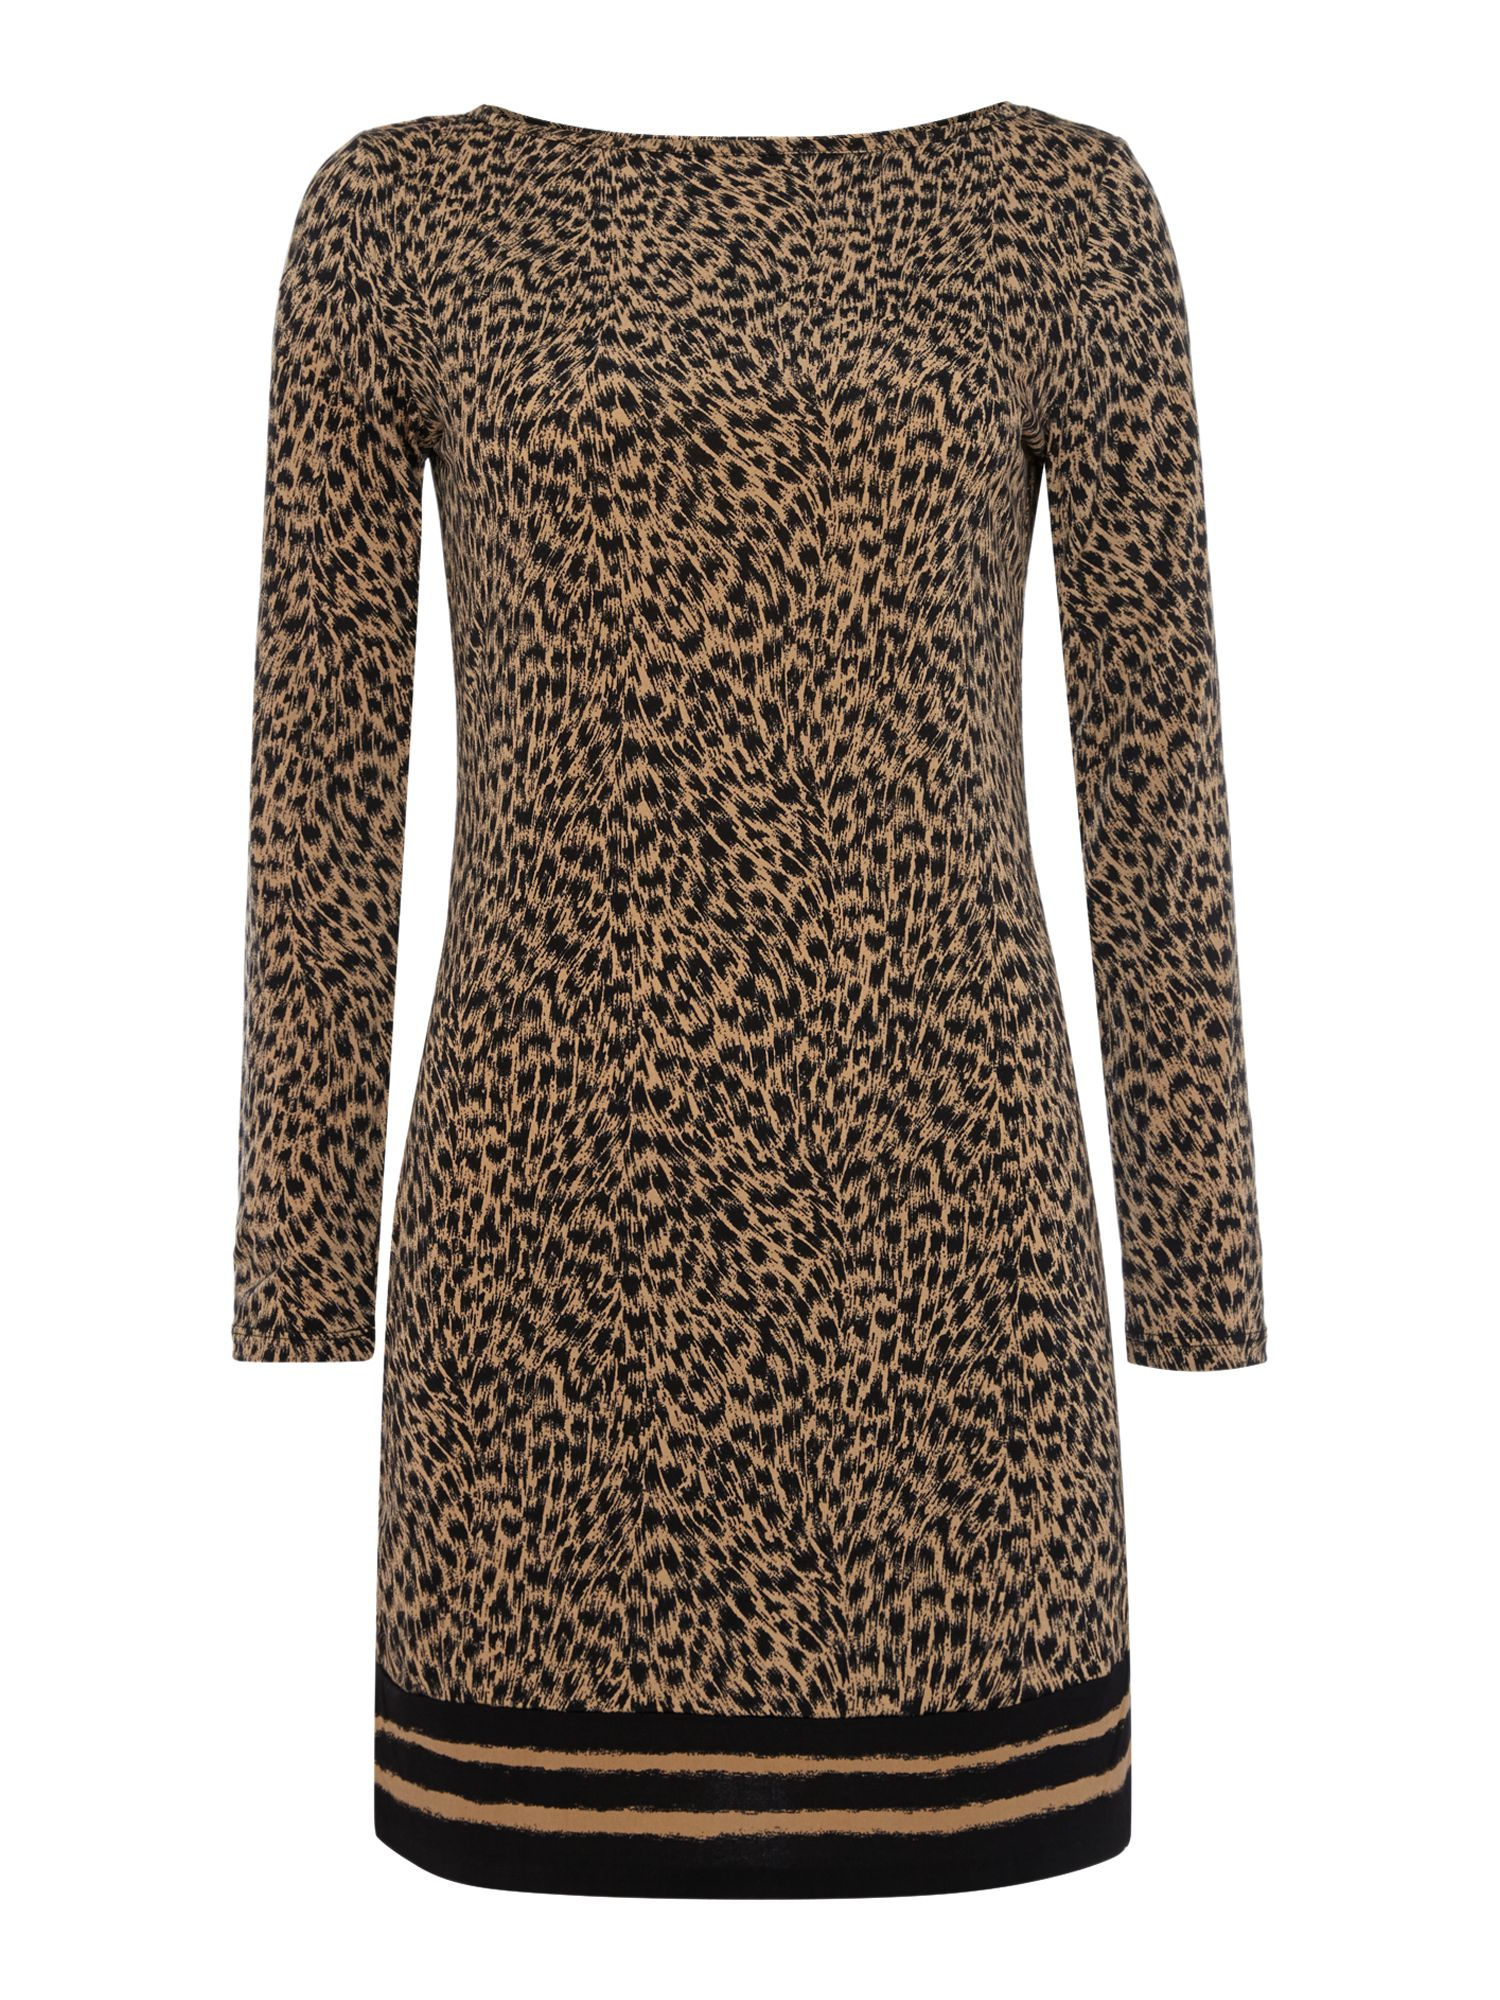 Kuala lumpur michael kors dress leopard print online cheap dama